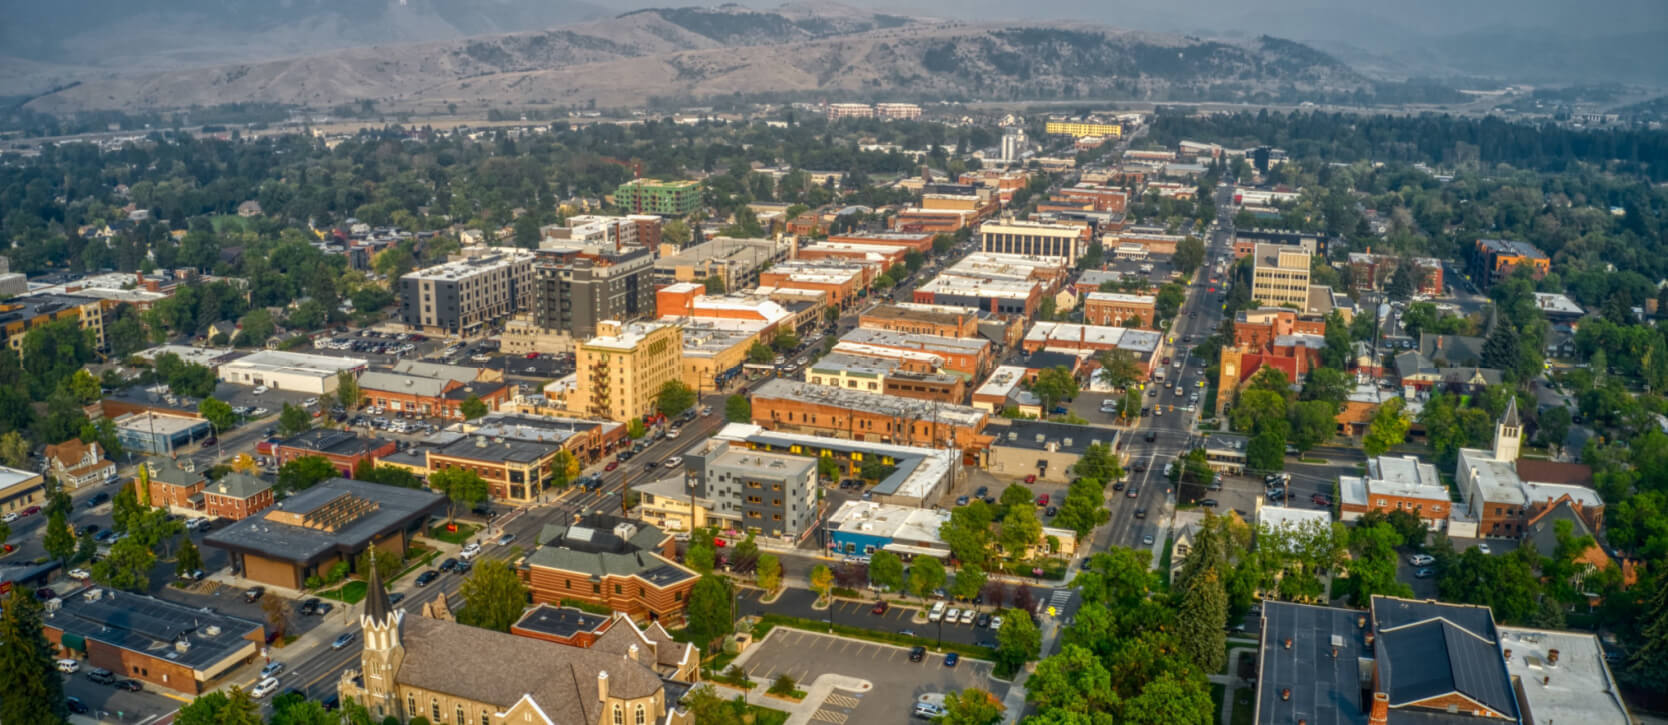 Aerial view of downtown Bozeman, Montana